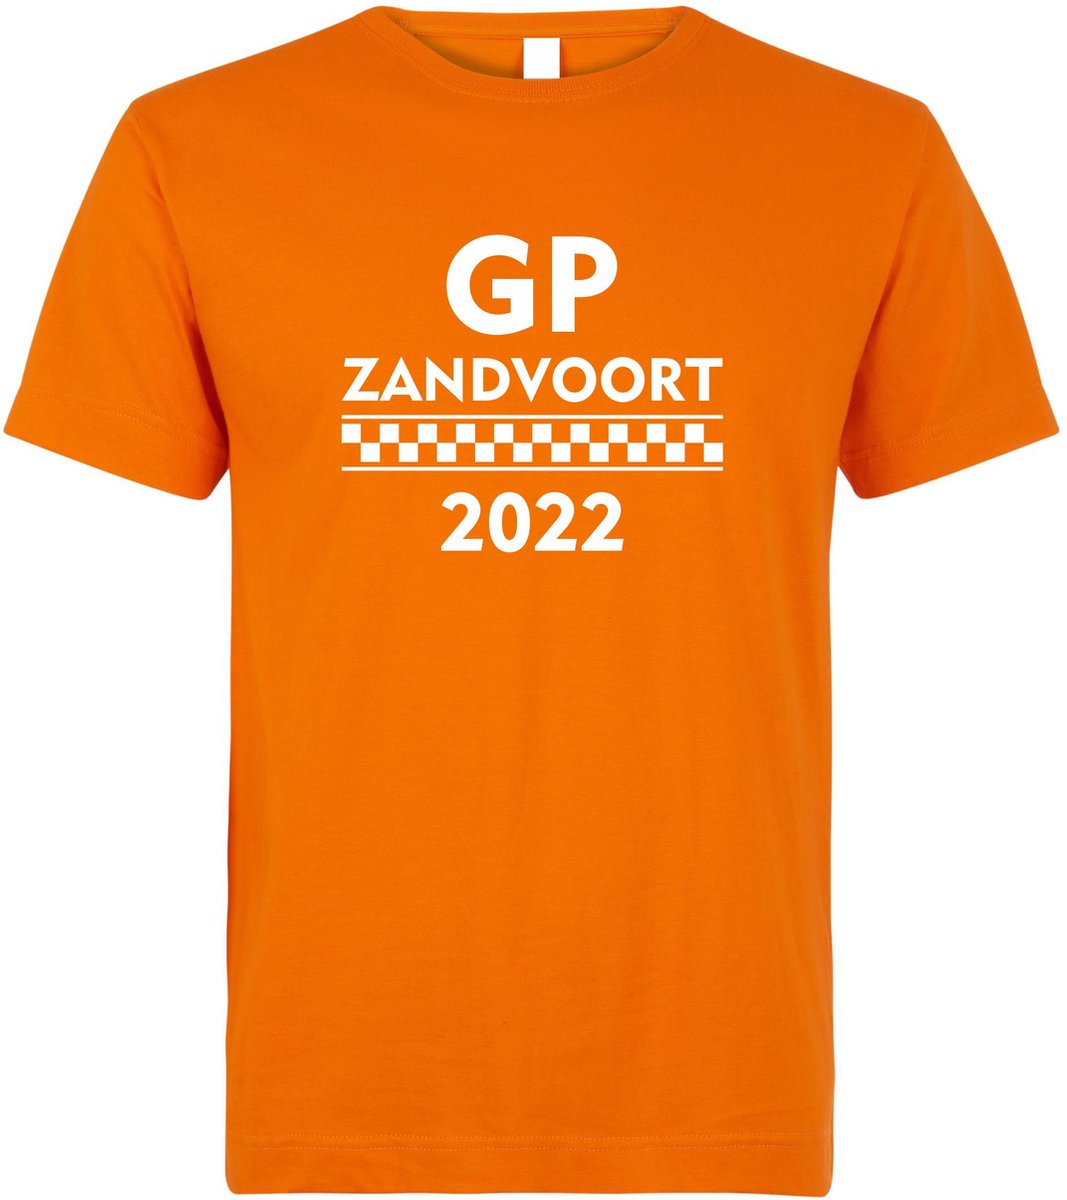 T-shirt kinderen GP Zandvoort 2022 | Max Verstappen / Red Bull Racing / Formule 1 fan | Grand Prix Circuit Zandvoort | kleding shirt | Oranje | maat 128